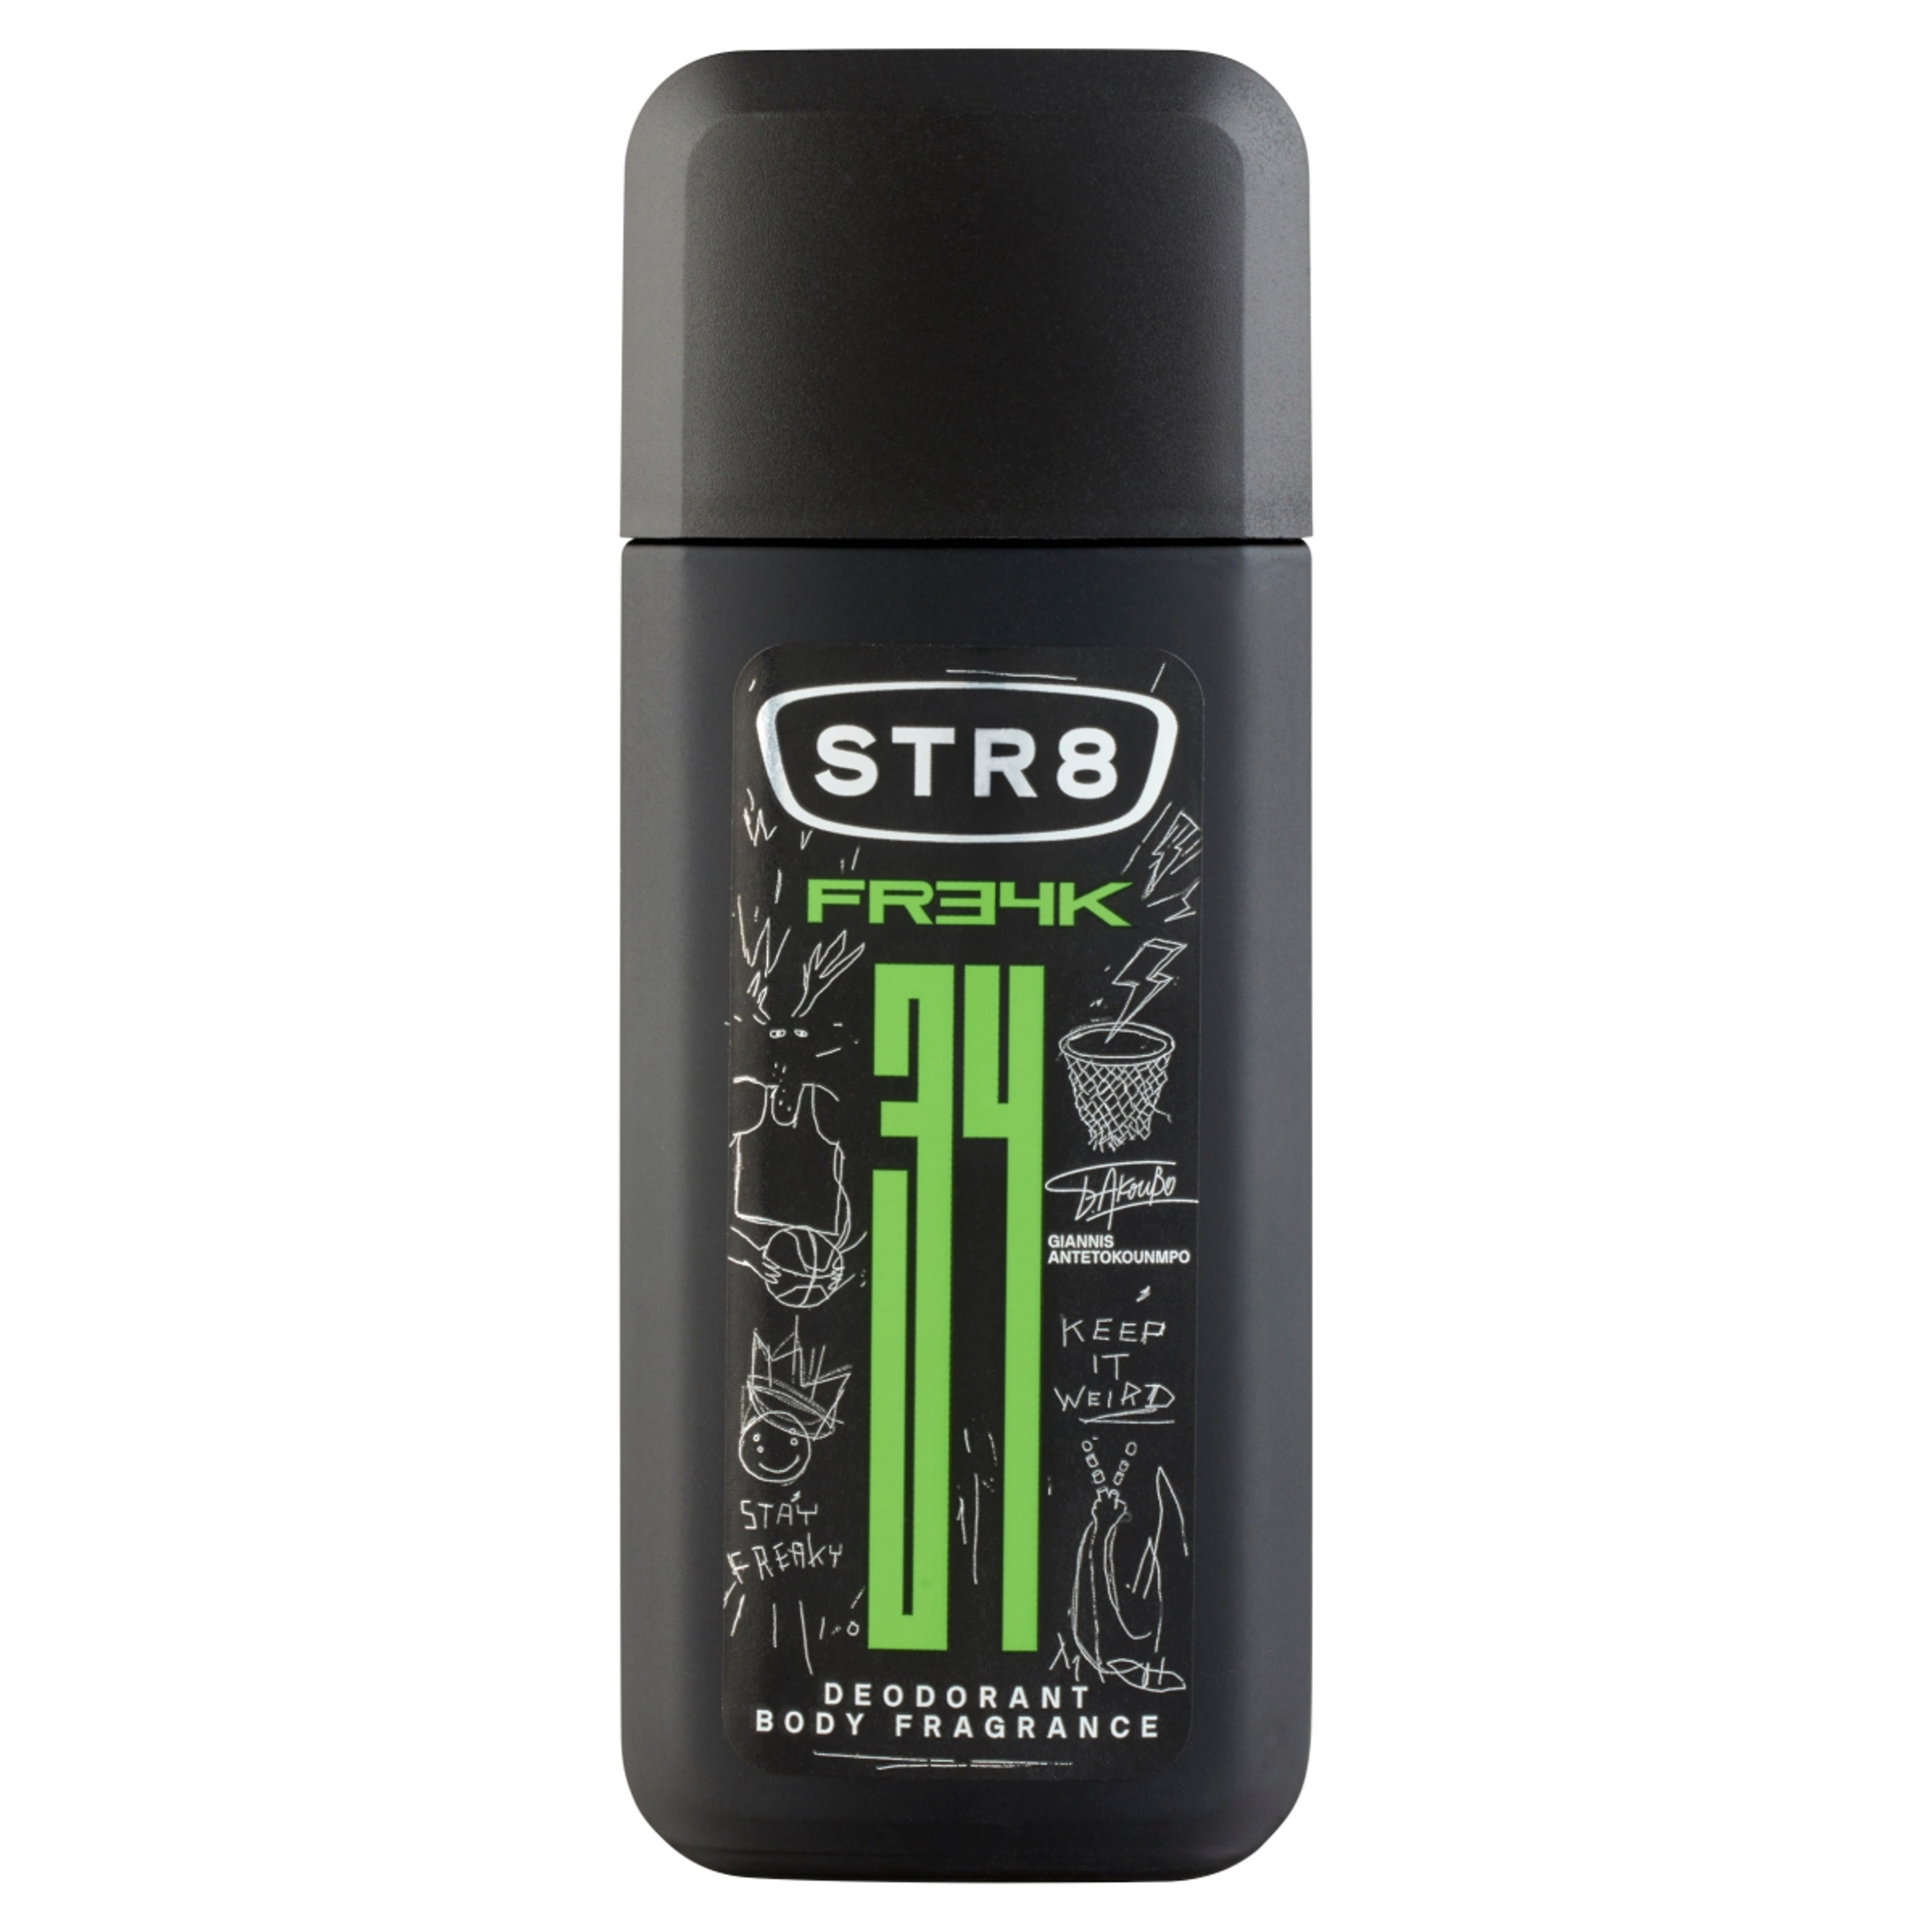 STR8 FR34K férfi body fragrance - 75 ml